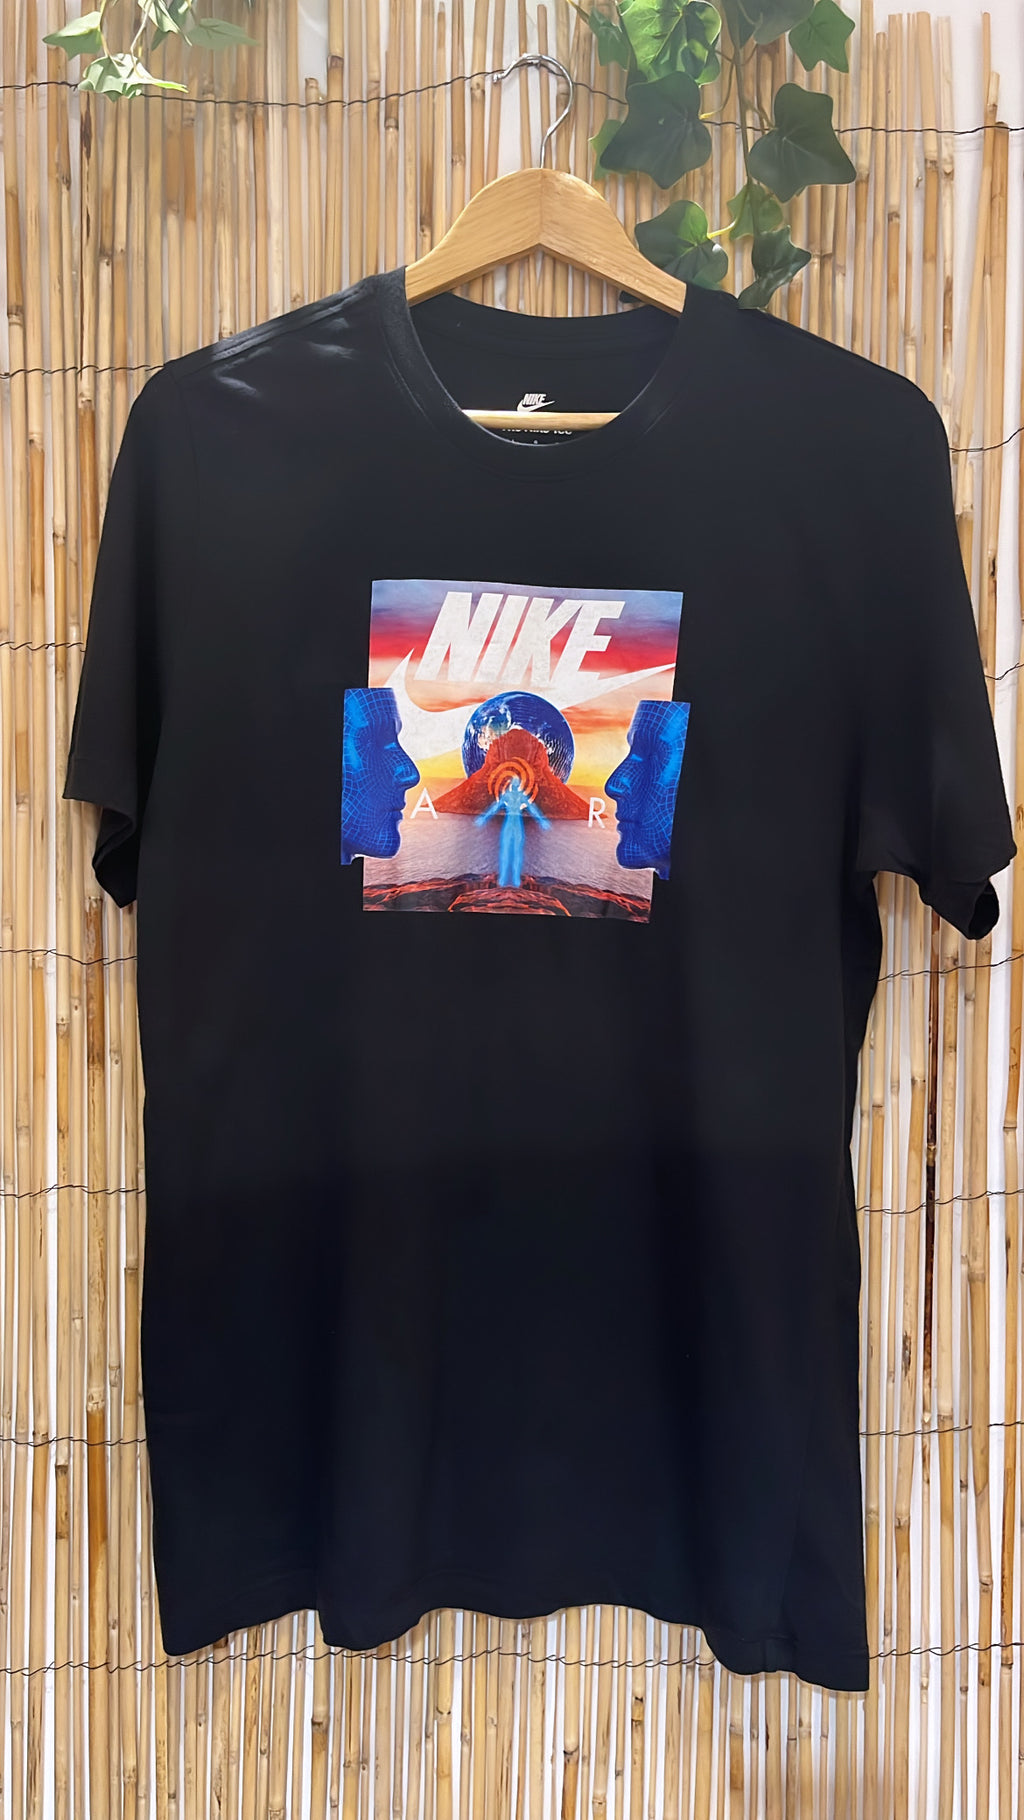 Tee-shirt Nike vintage